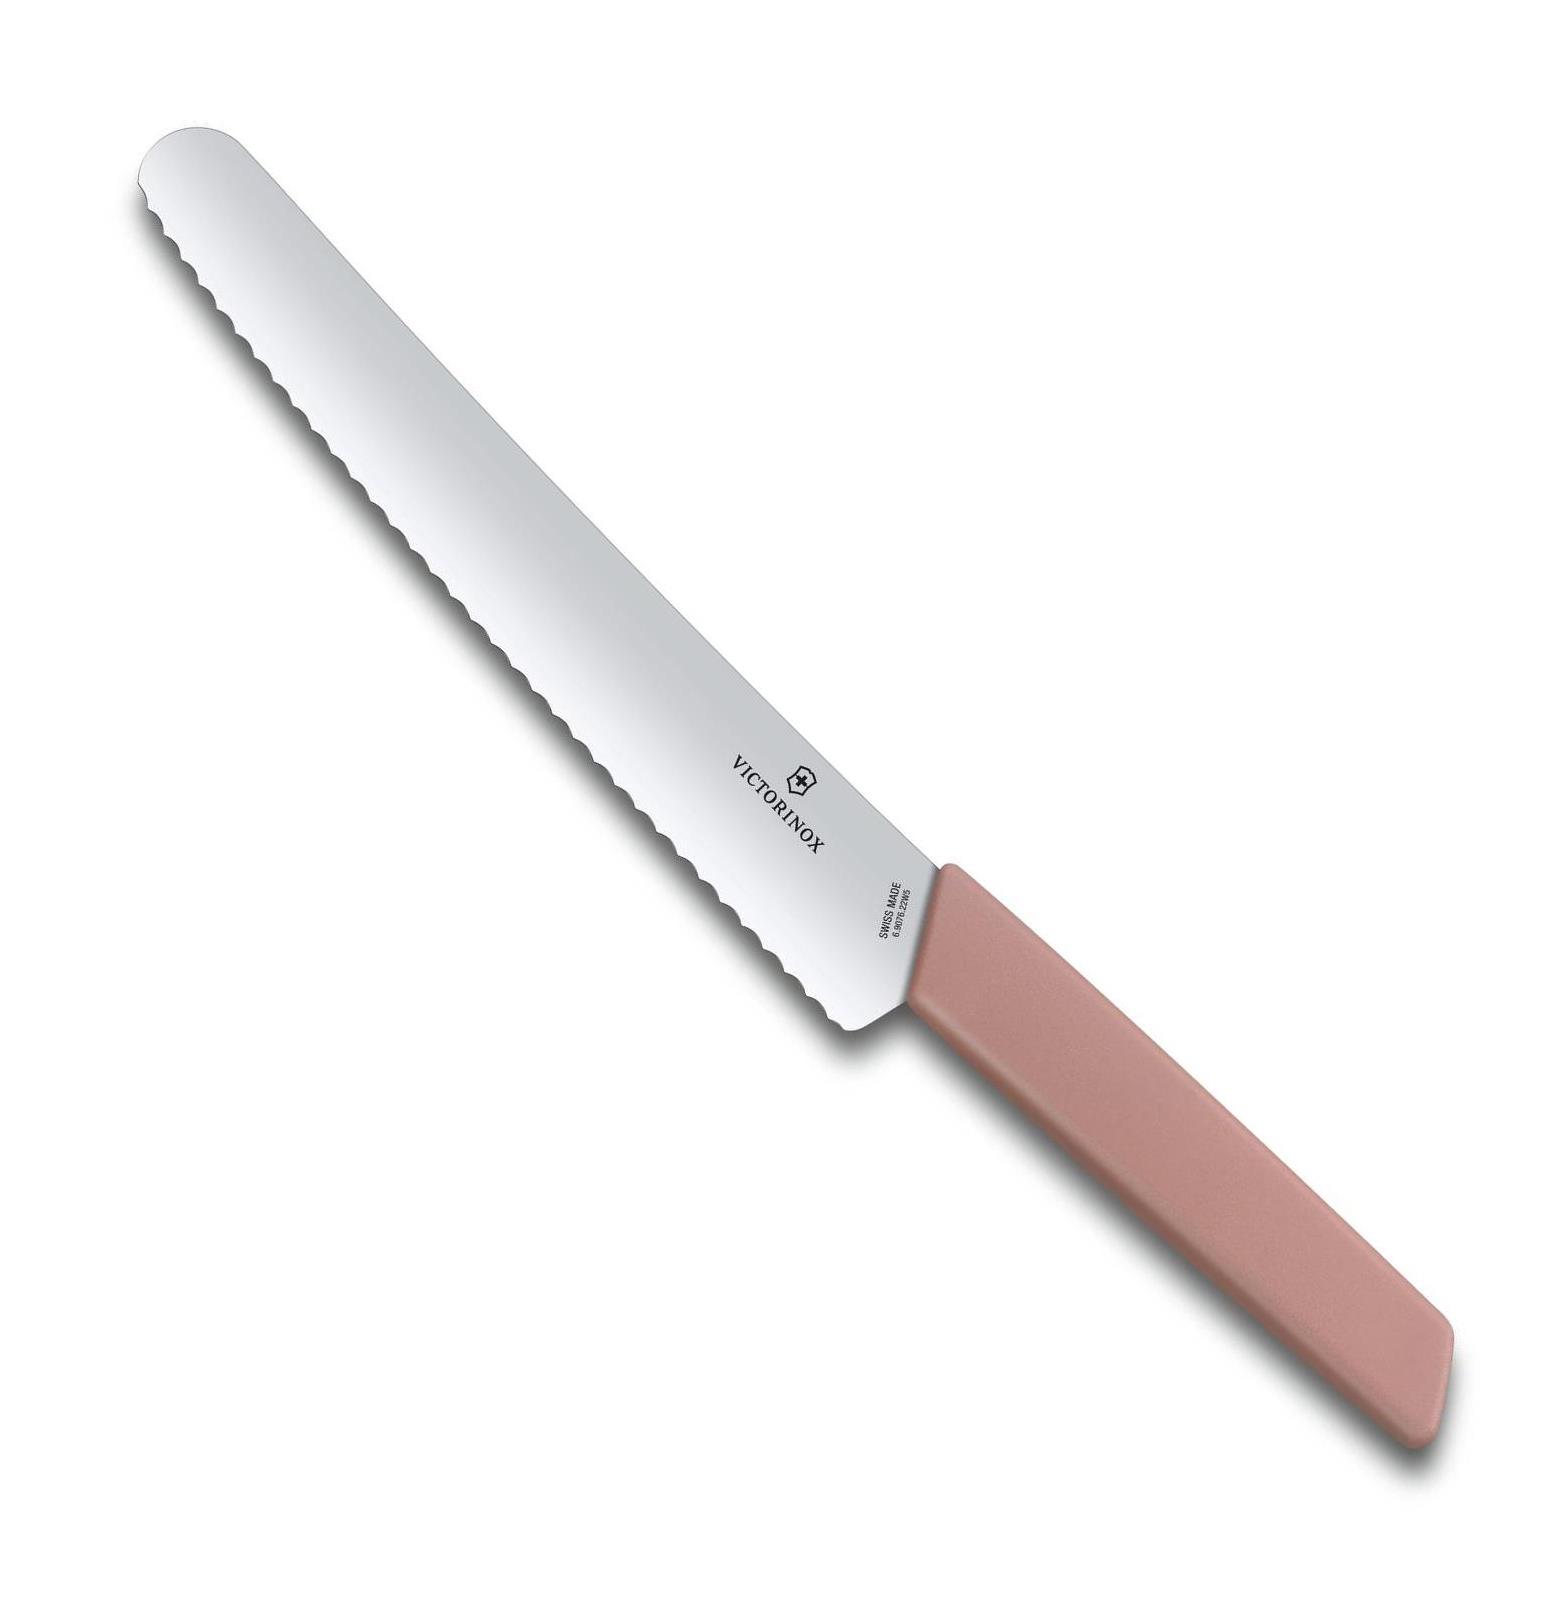 Nůž na chleba 22 cm lososový SWISS MODERN - Victorinox